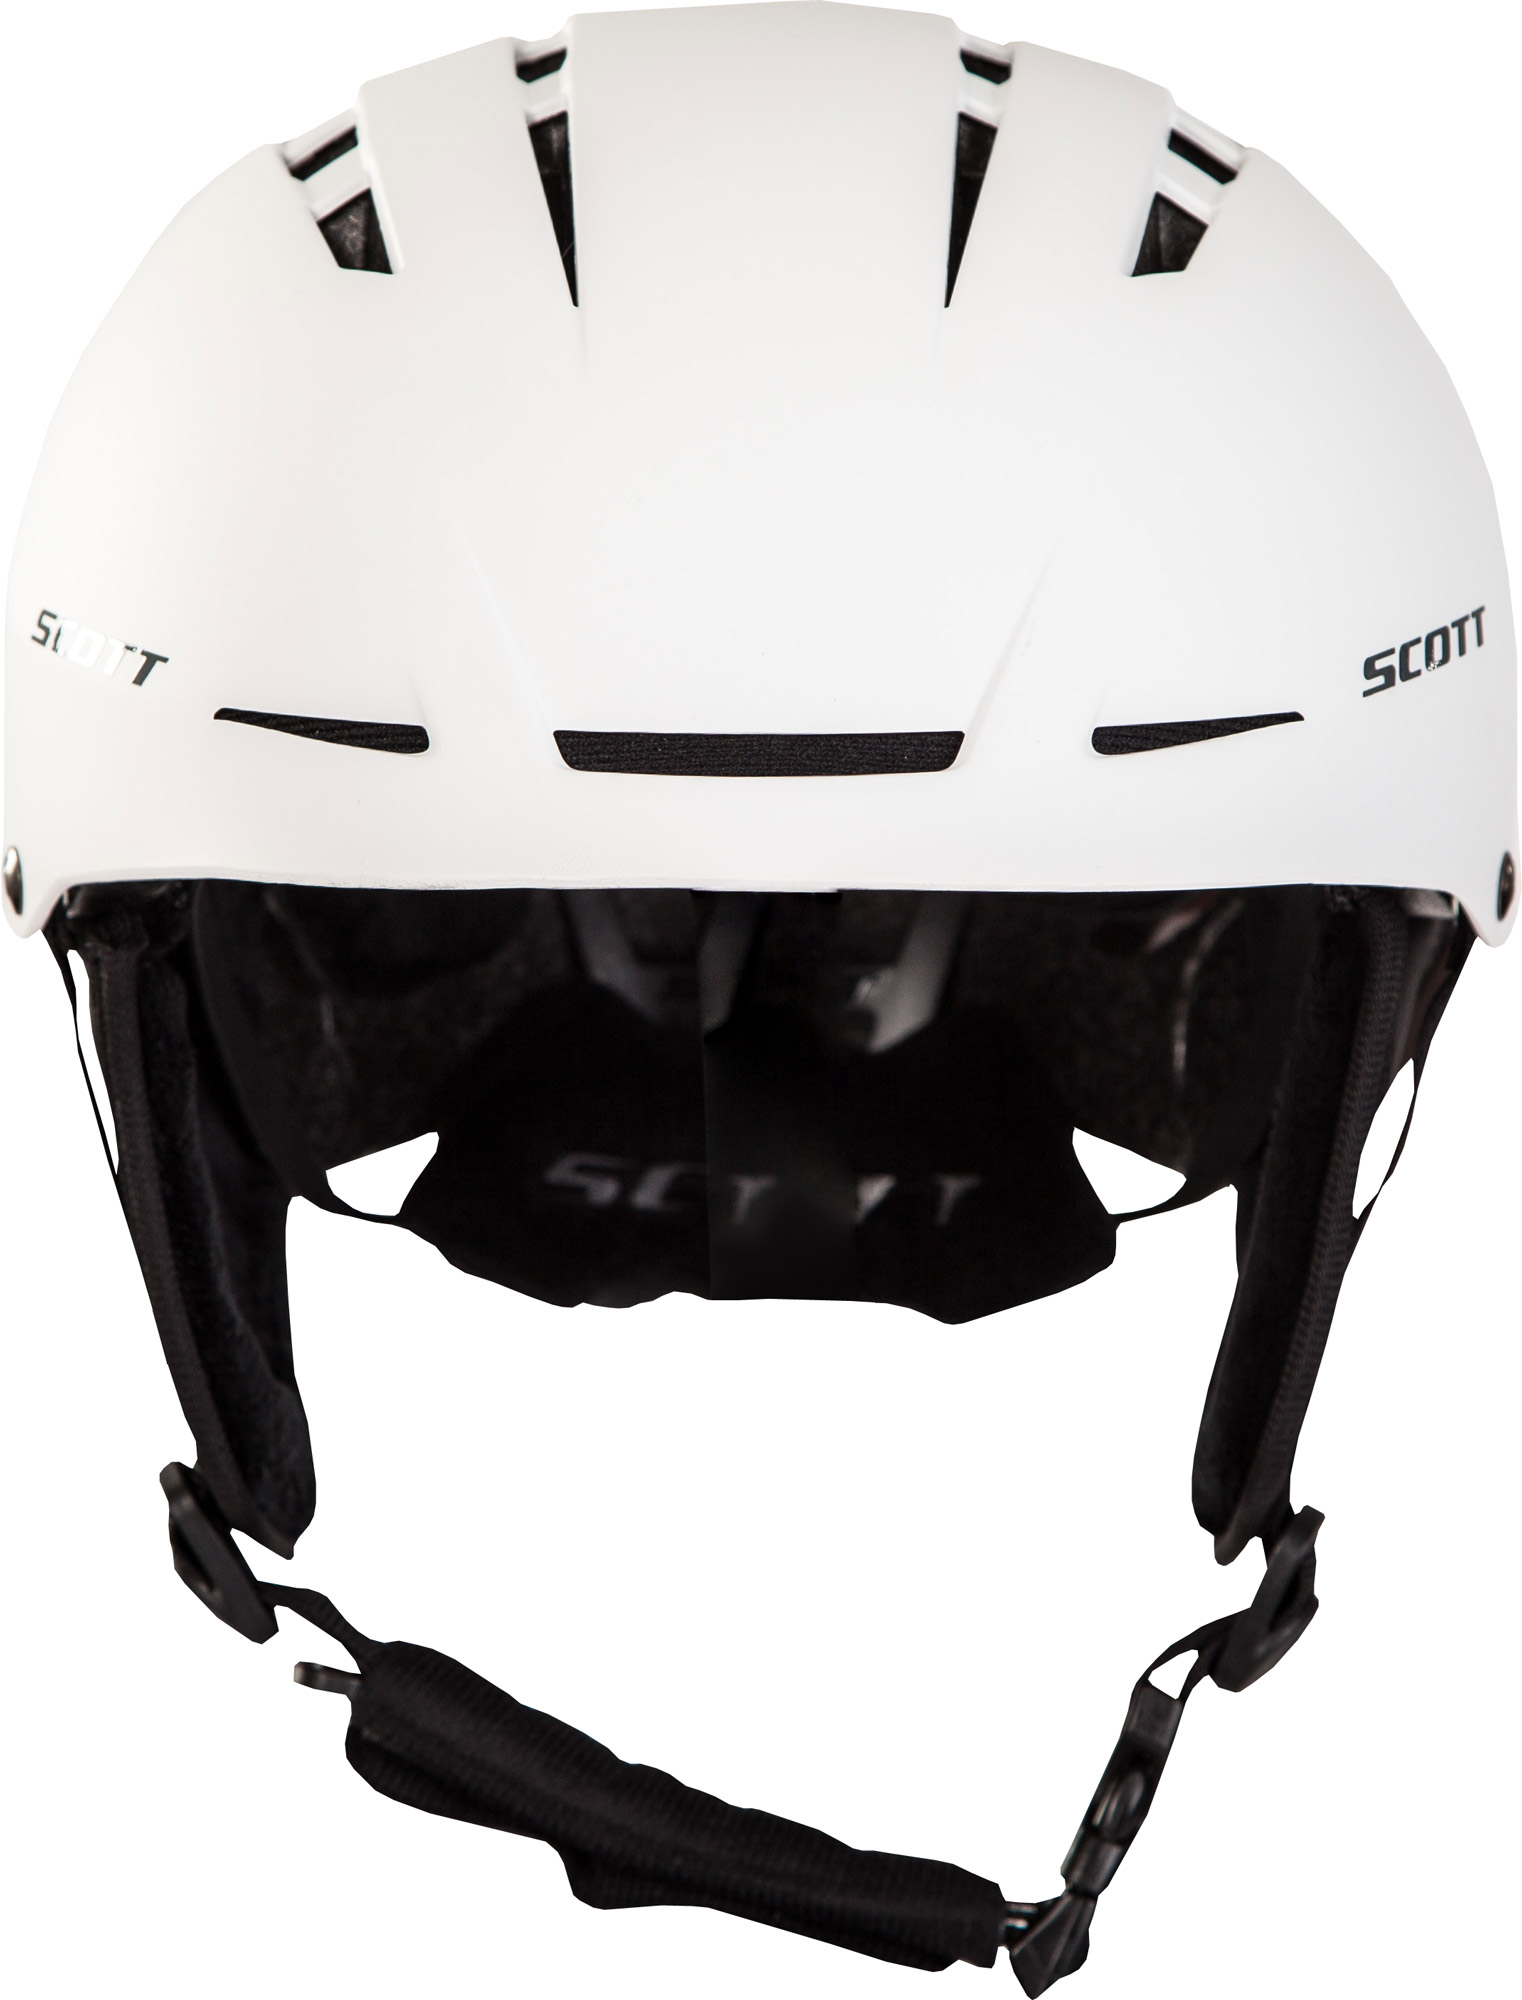 Alpine Ski Helmet